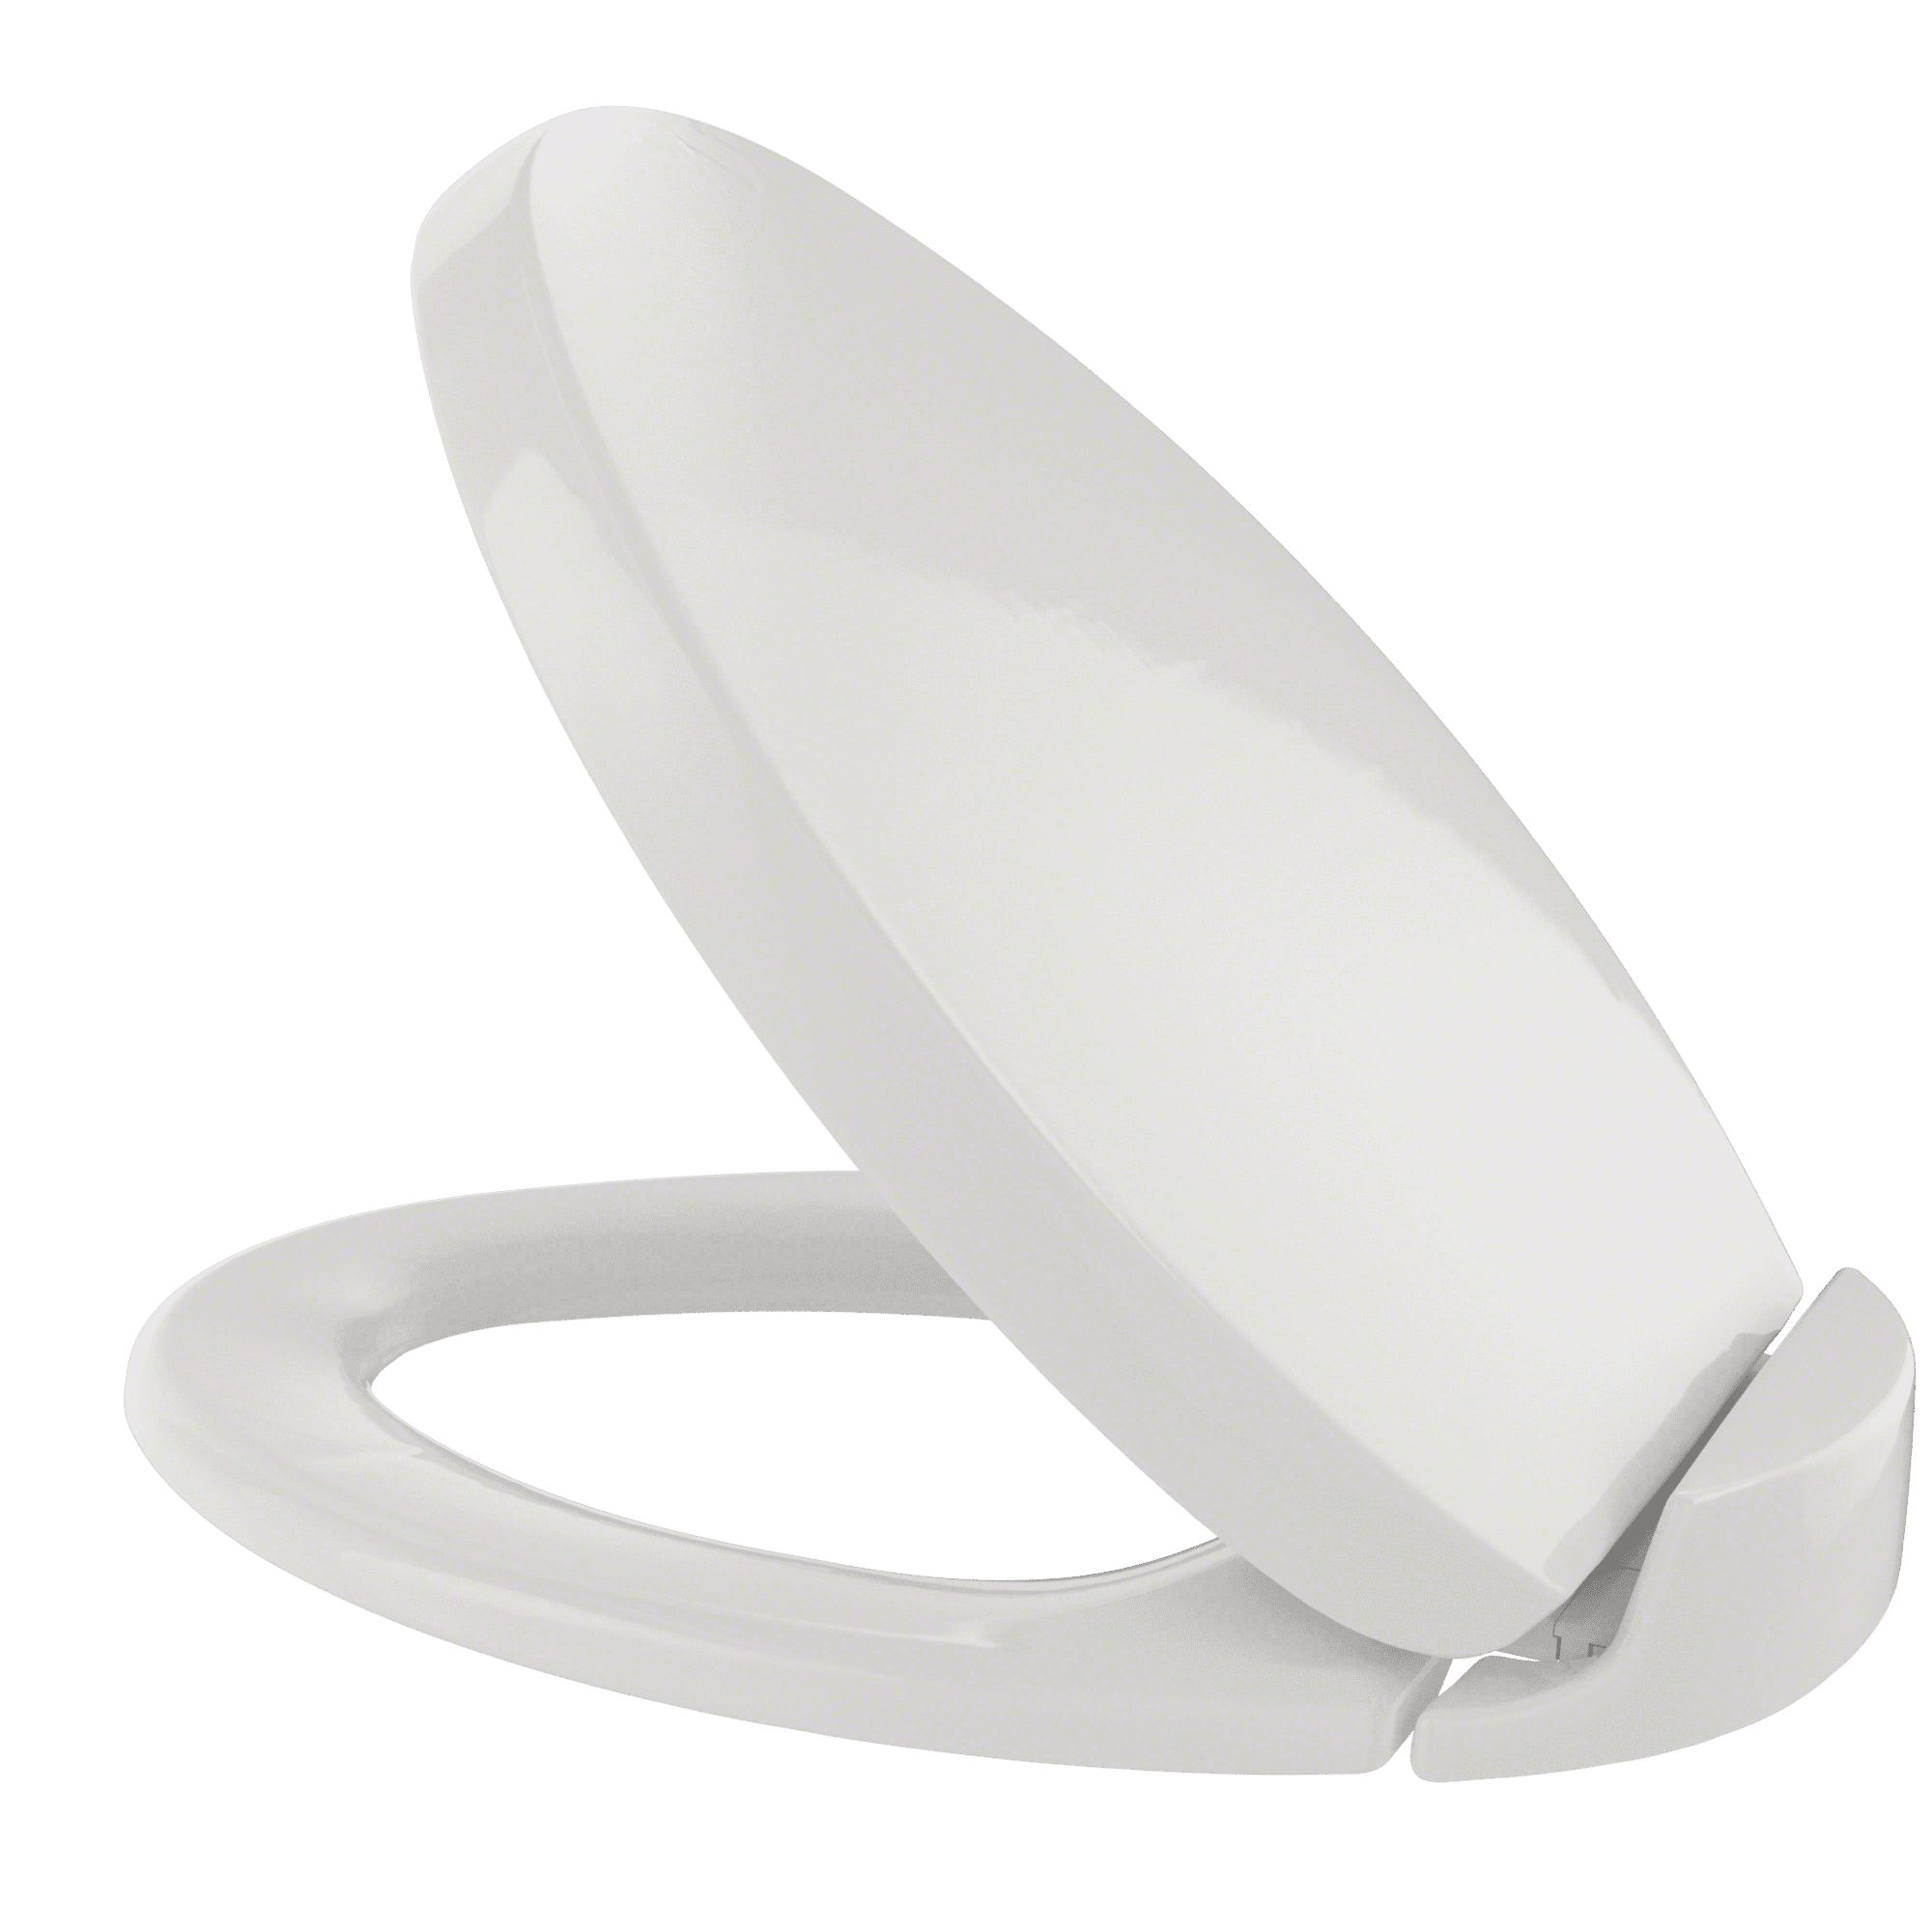 Toto SoftClose Round Toilet Seat Plastic Bathroom Accessory Lid Cotton White New